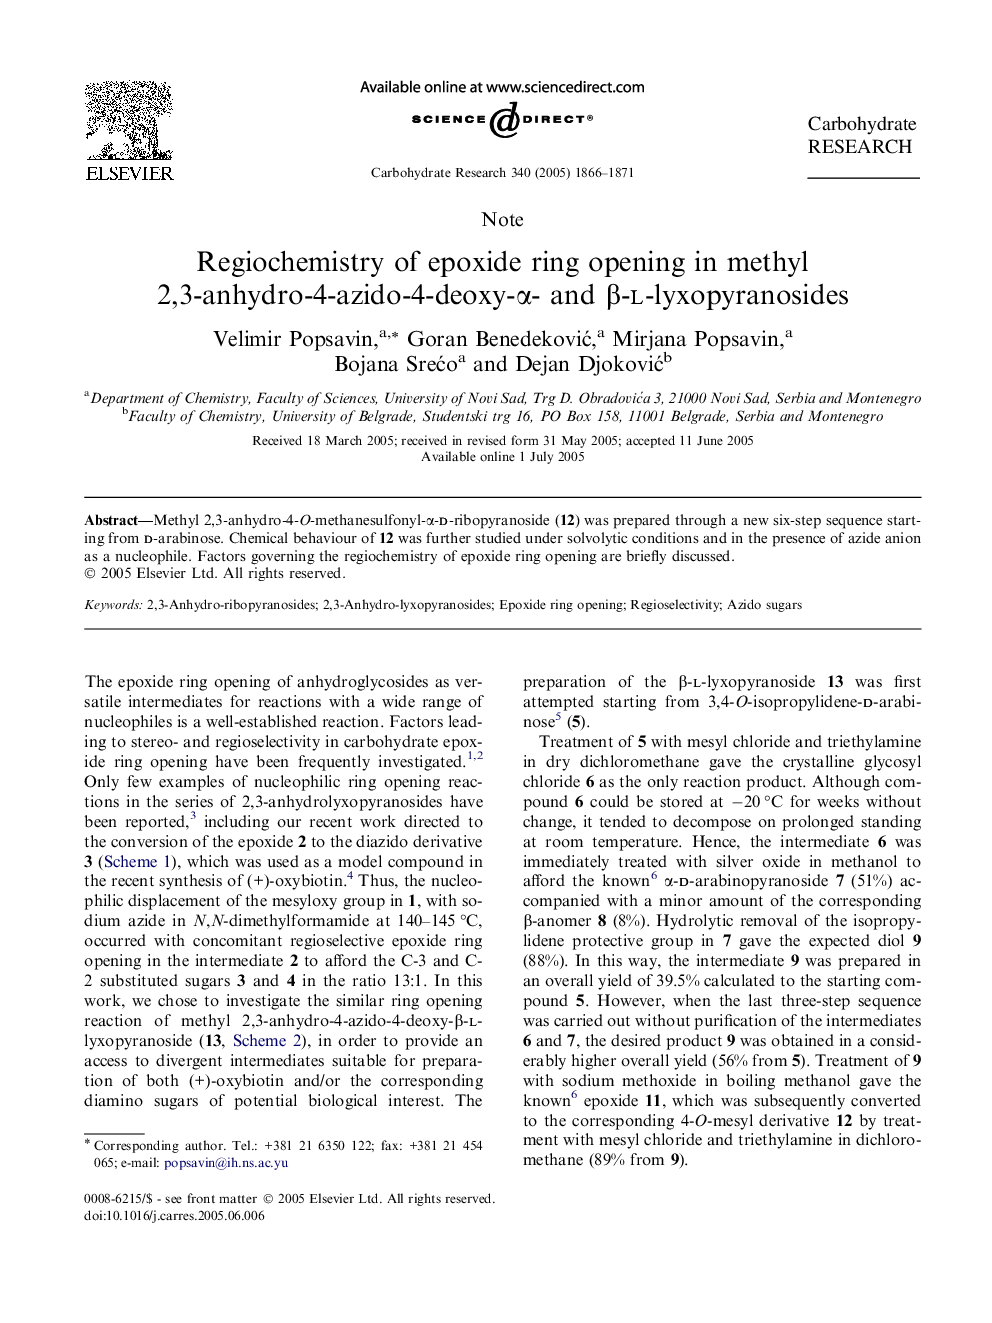 Regiochemistry of epoxide ring opening in methyl 2,3-anhydro-4-azido-4-deoxy-Î±- and Î²-l-lyxopyranosides